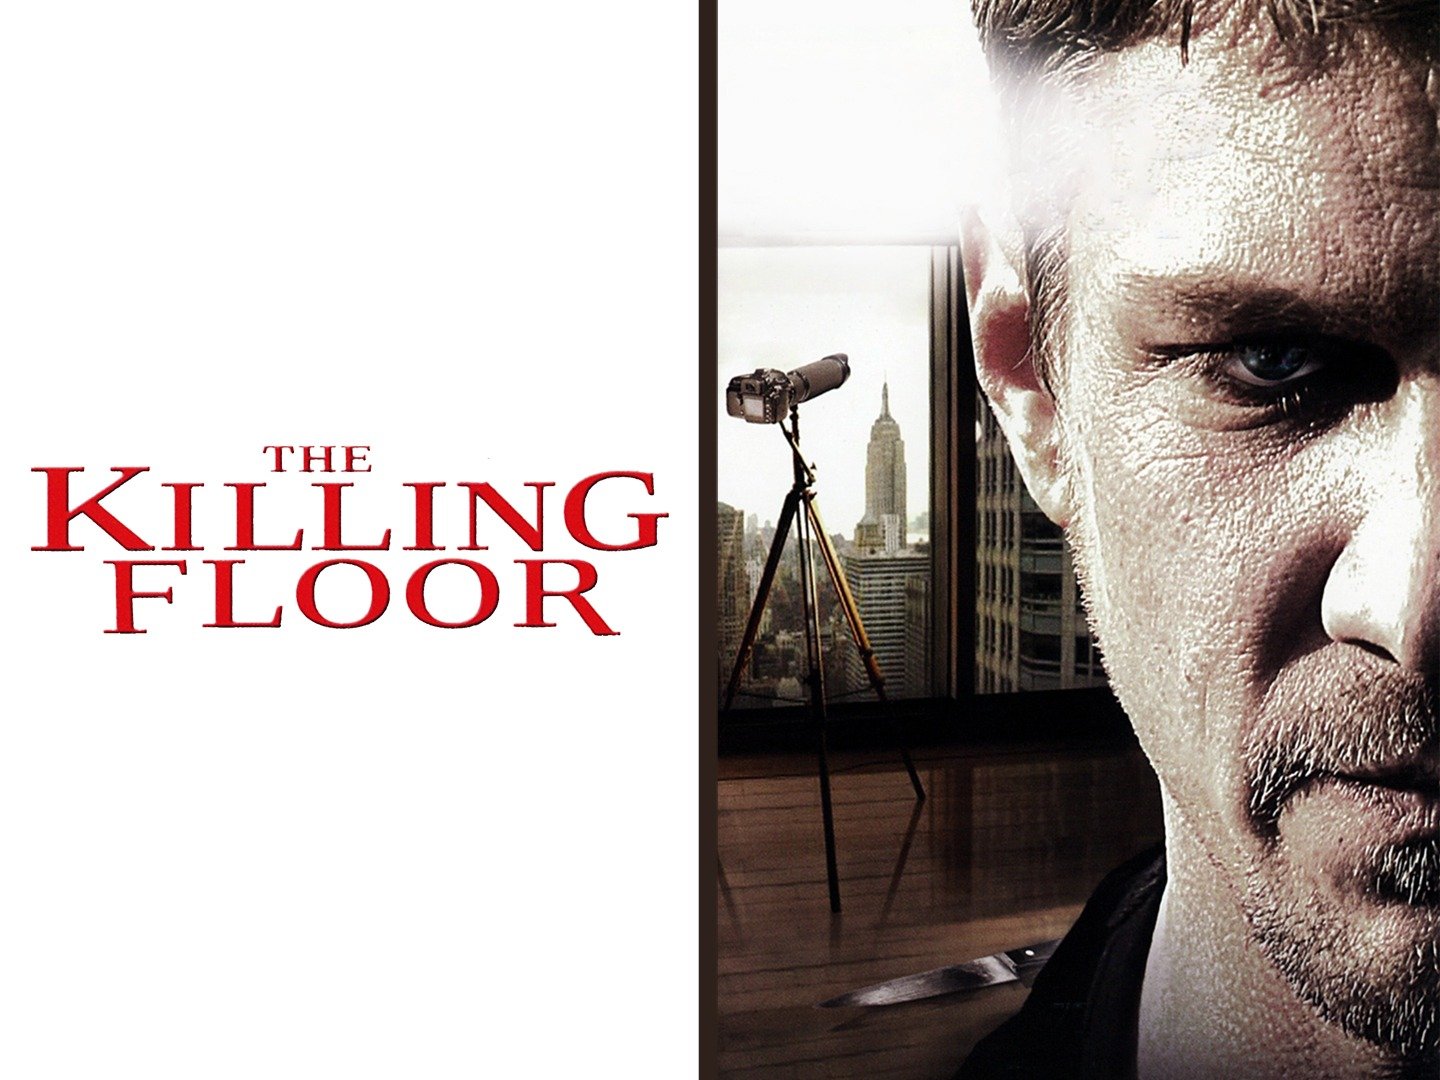 The Killing Floor 07 Rotten Tomatoes